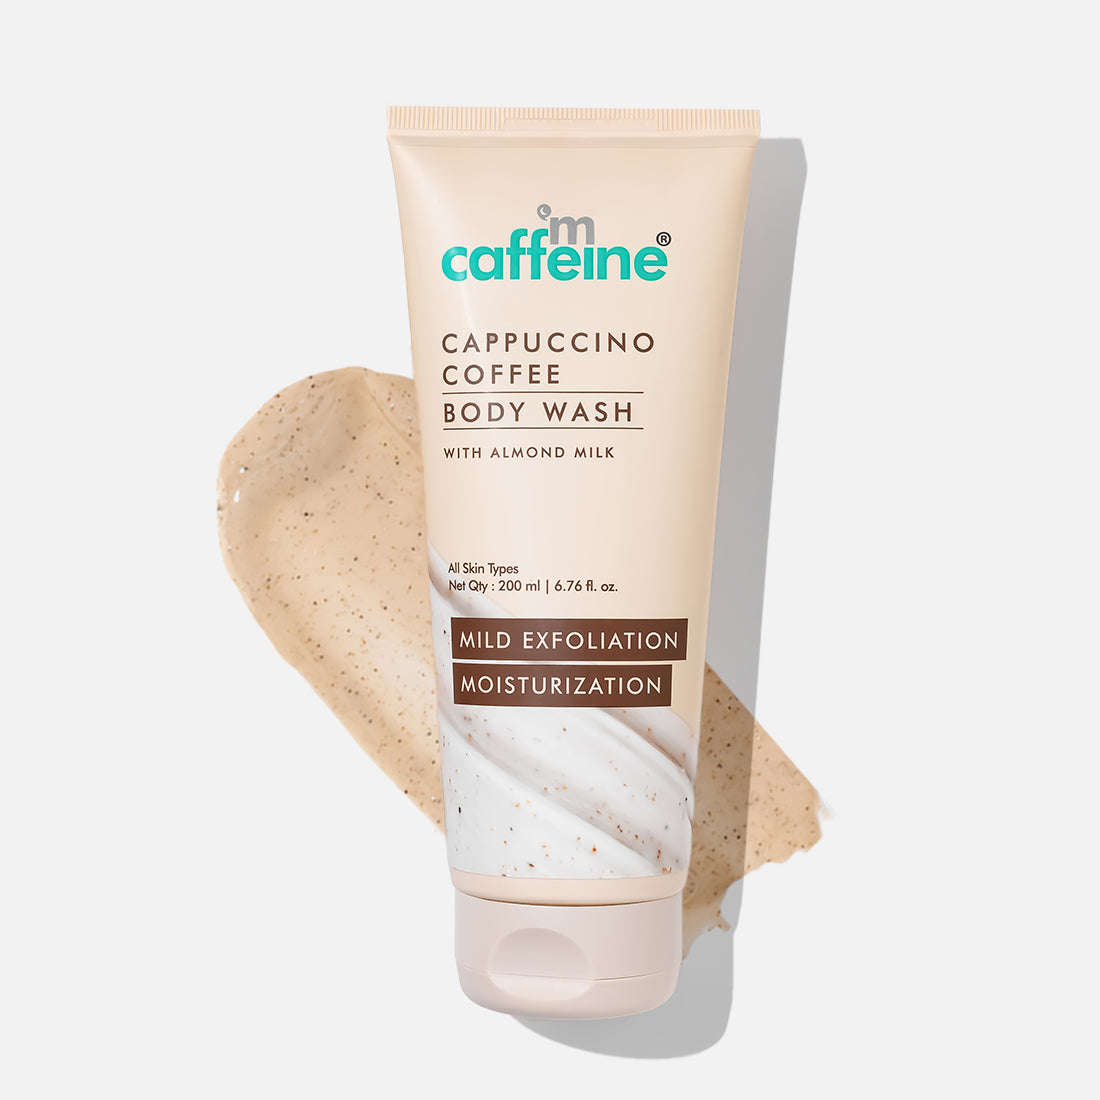 mCaffeine Cappuccino Coffee Body Wash Tube - 200 ml